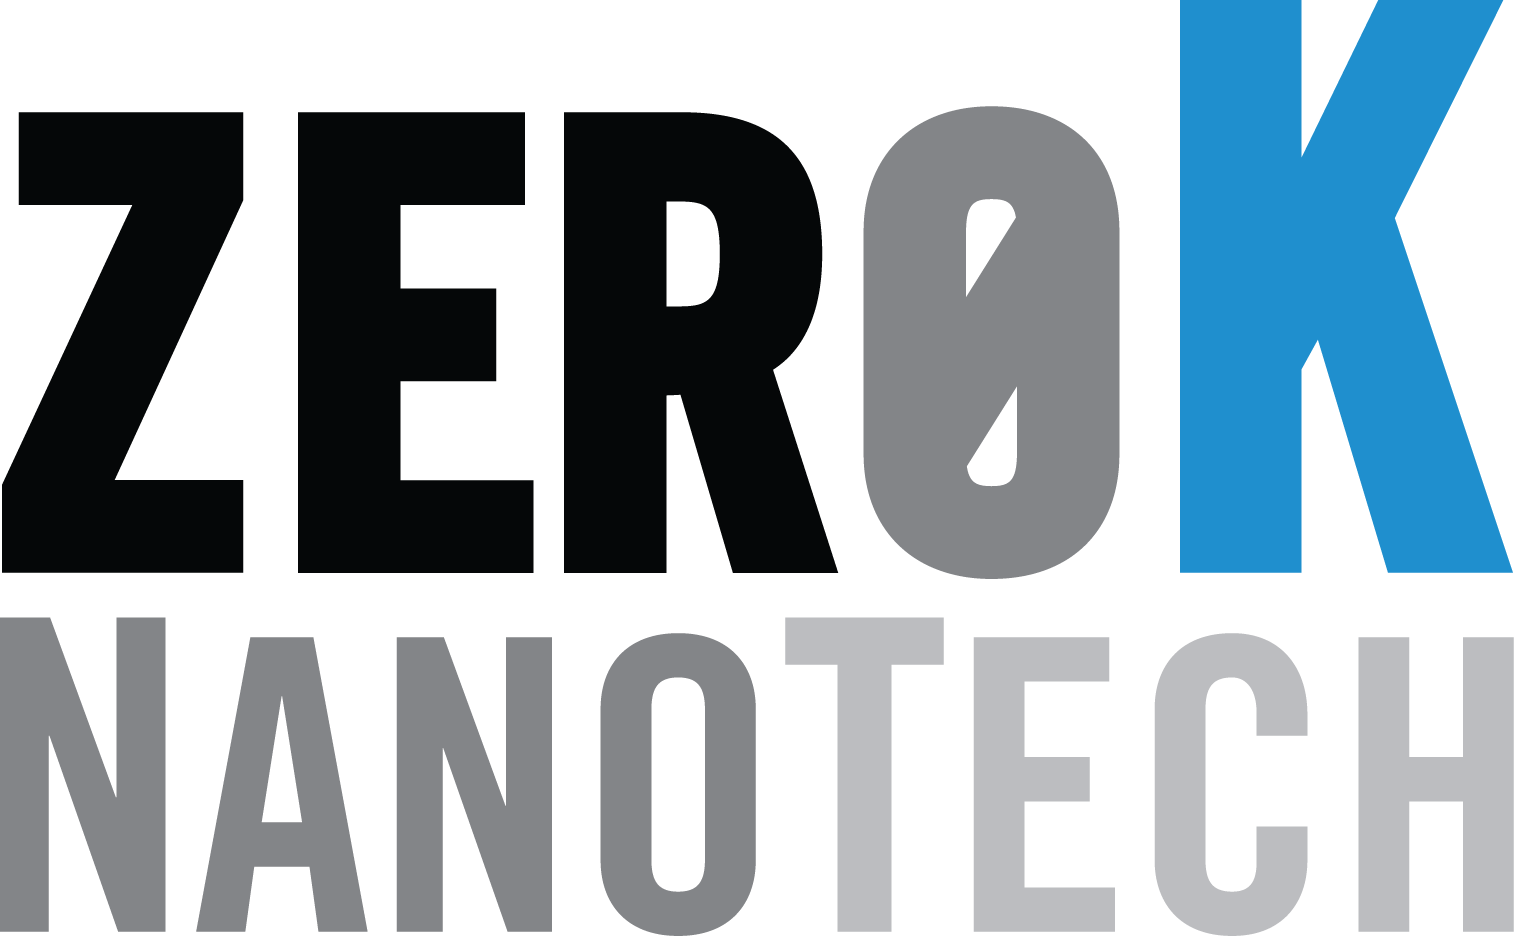 zeroK NanoTech Logo